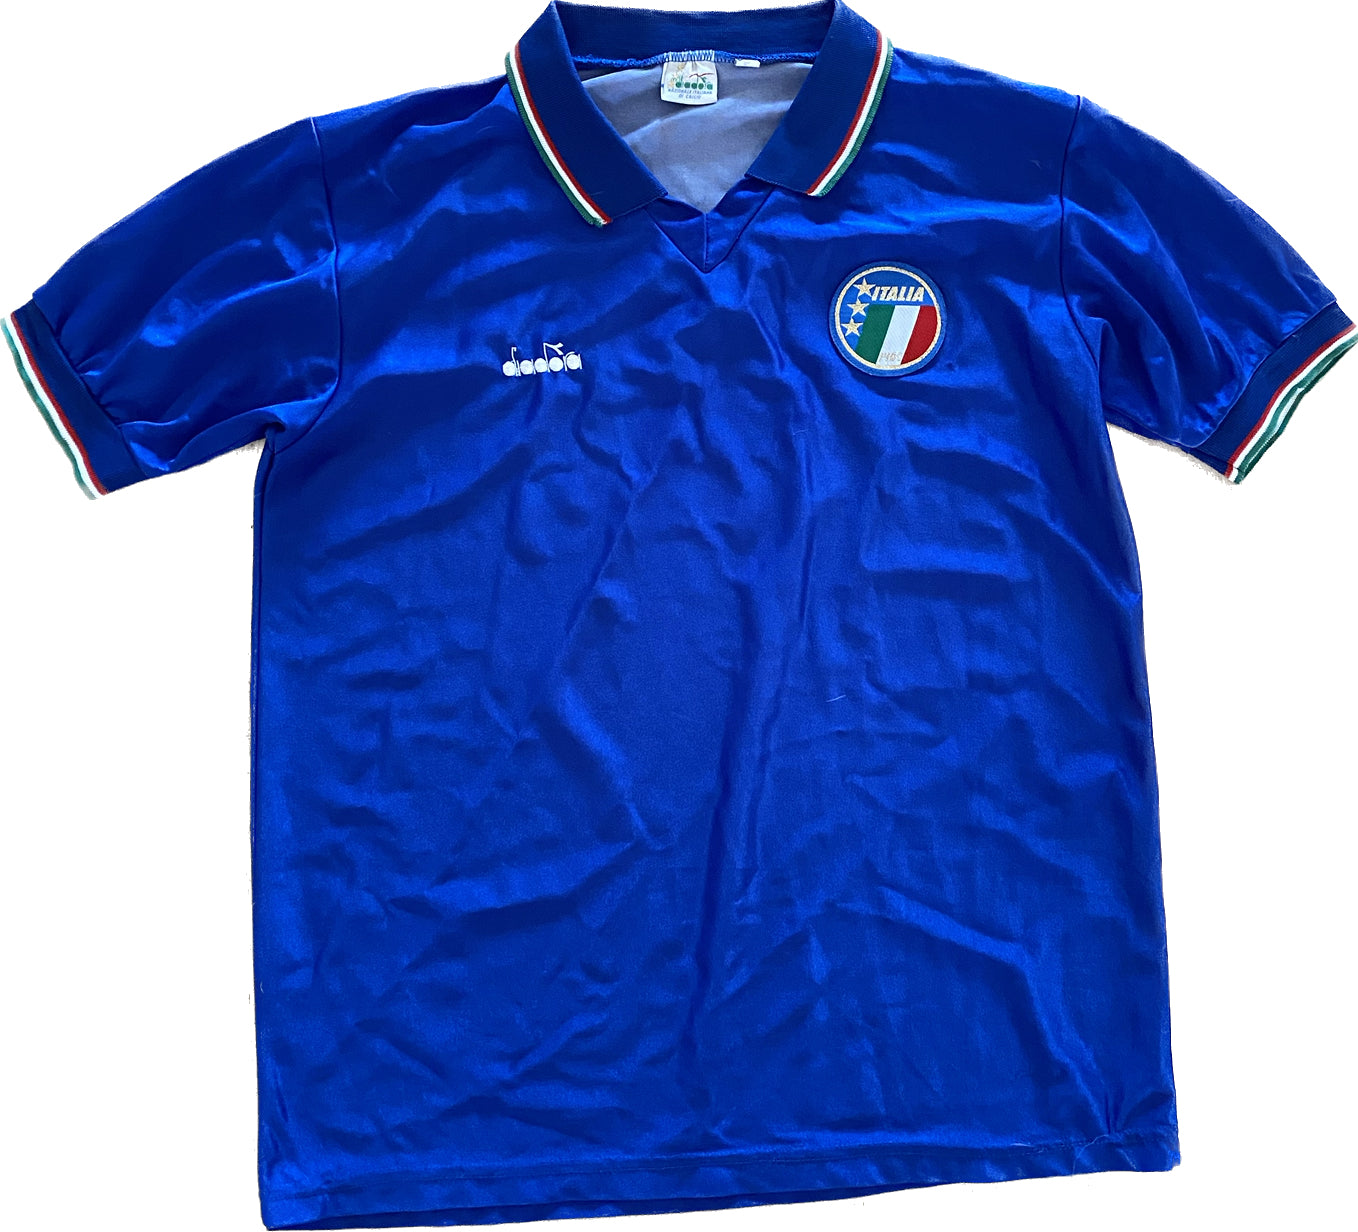 Italy 1986-1990 home kit